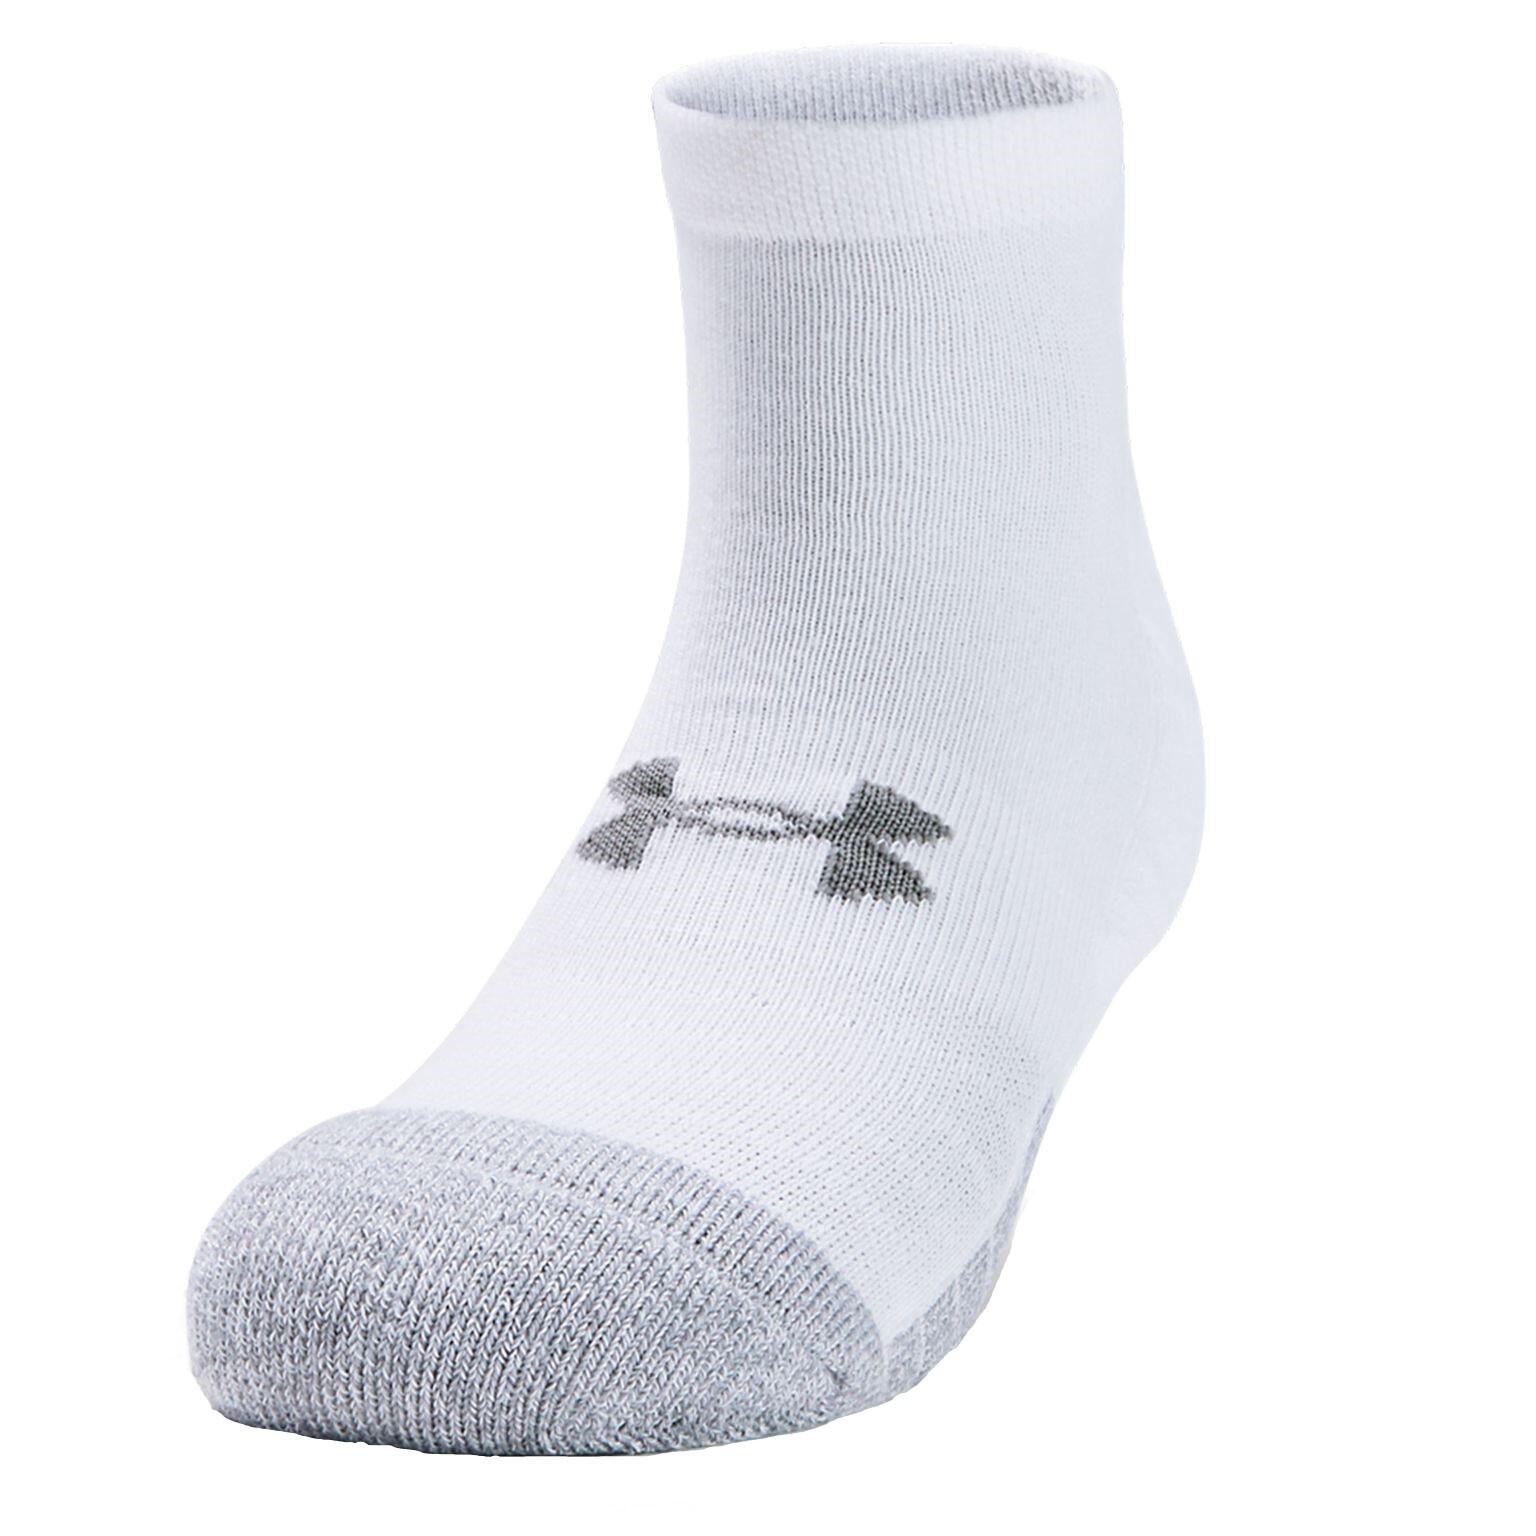 UNDER ARMOUR Mens HeatGear Socks (White/Steel Grey)